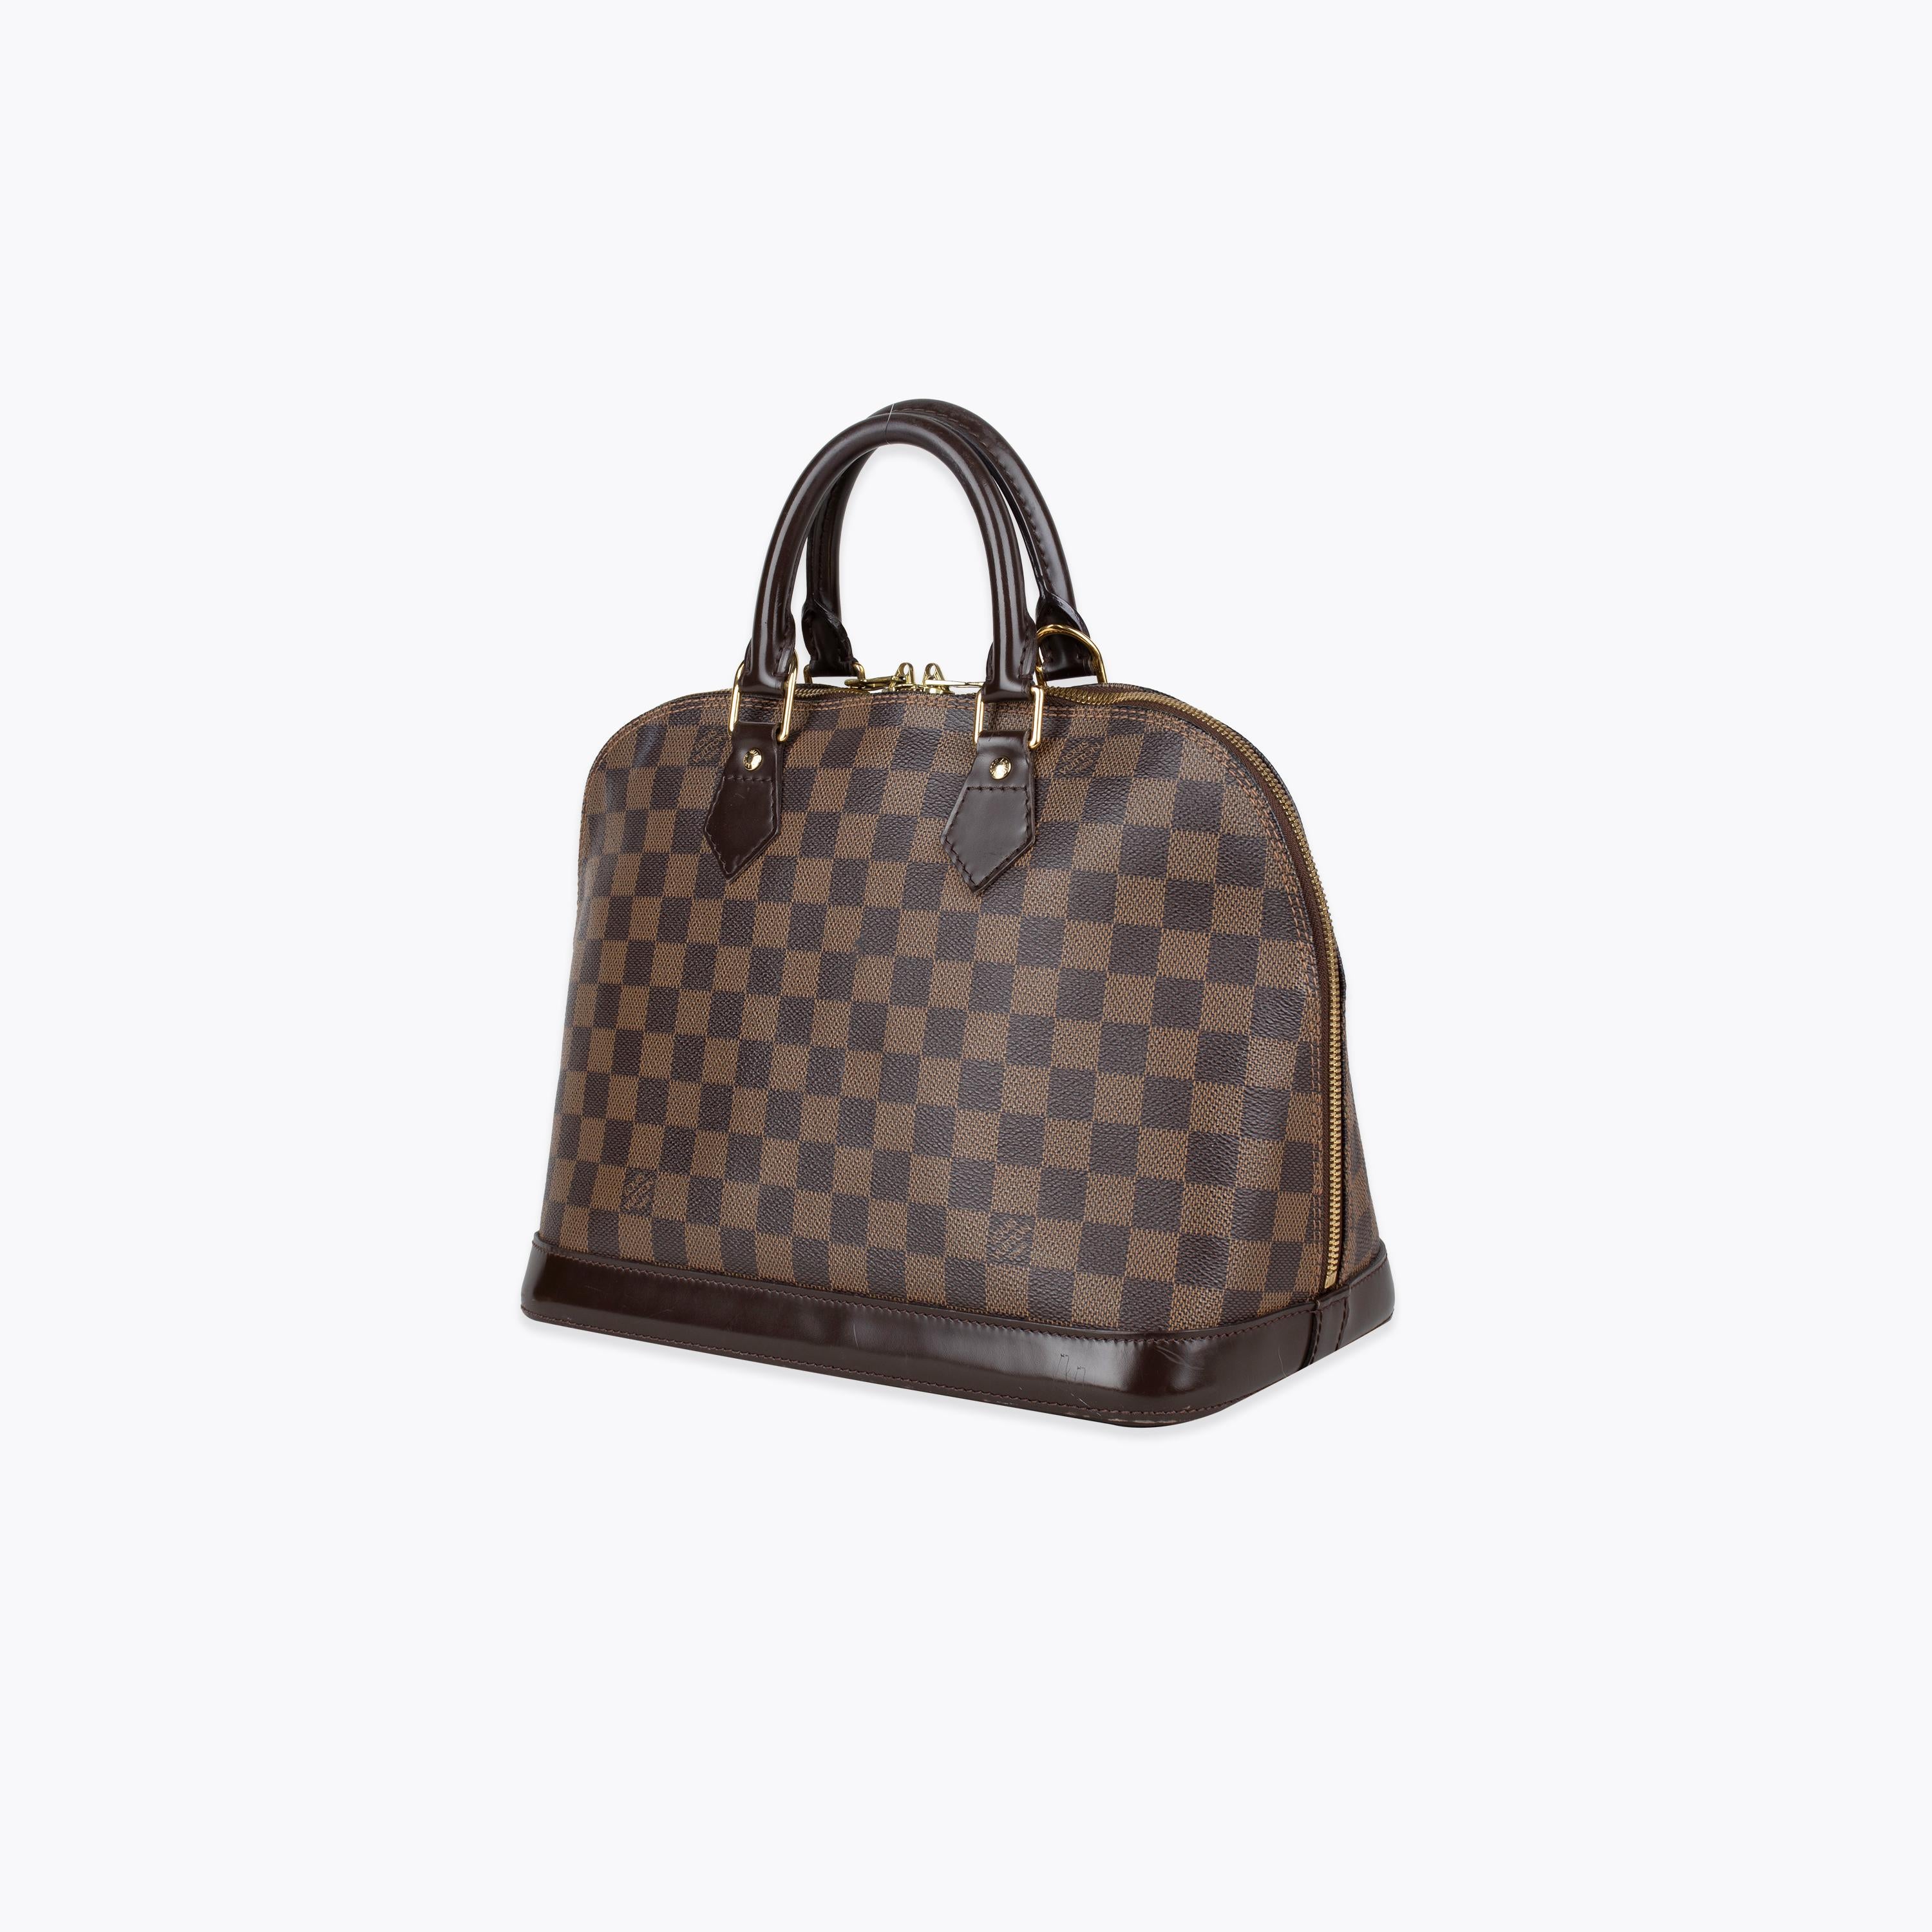 Louis Vuitton Ebene Alma PM Bag In Good Condition For Sale In Sundbyberg, SE